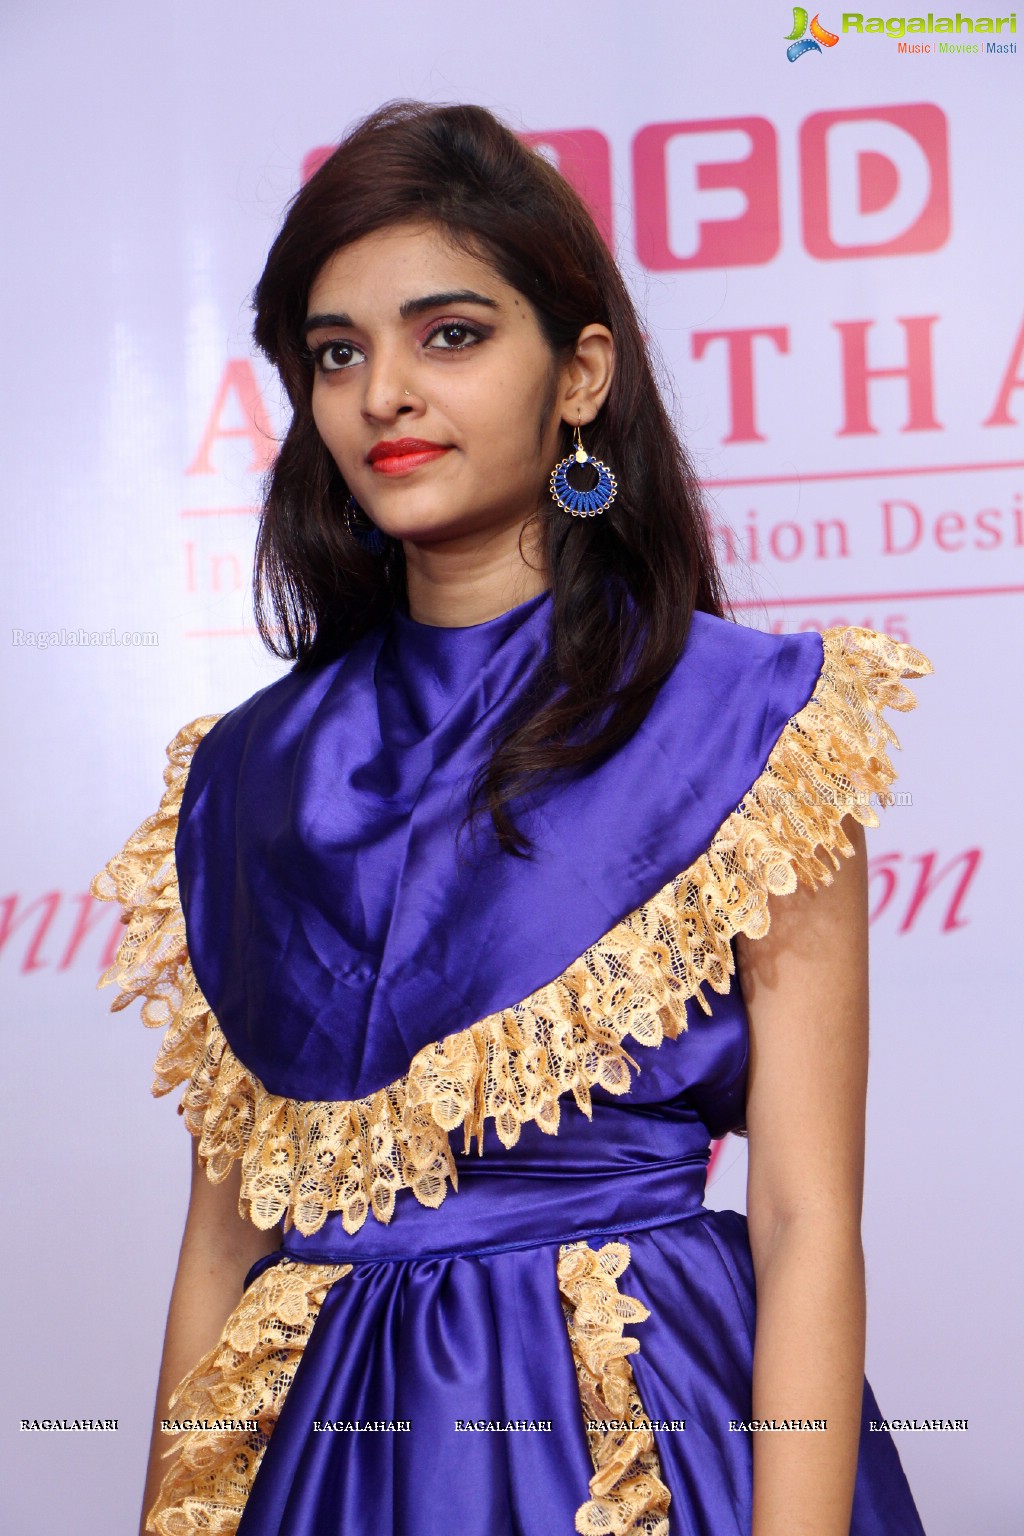 Arnitha Institute of Fashion Design Annual Fashion Show 2016, Hyderabad